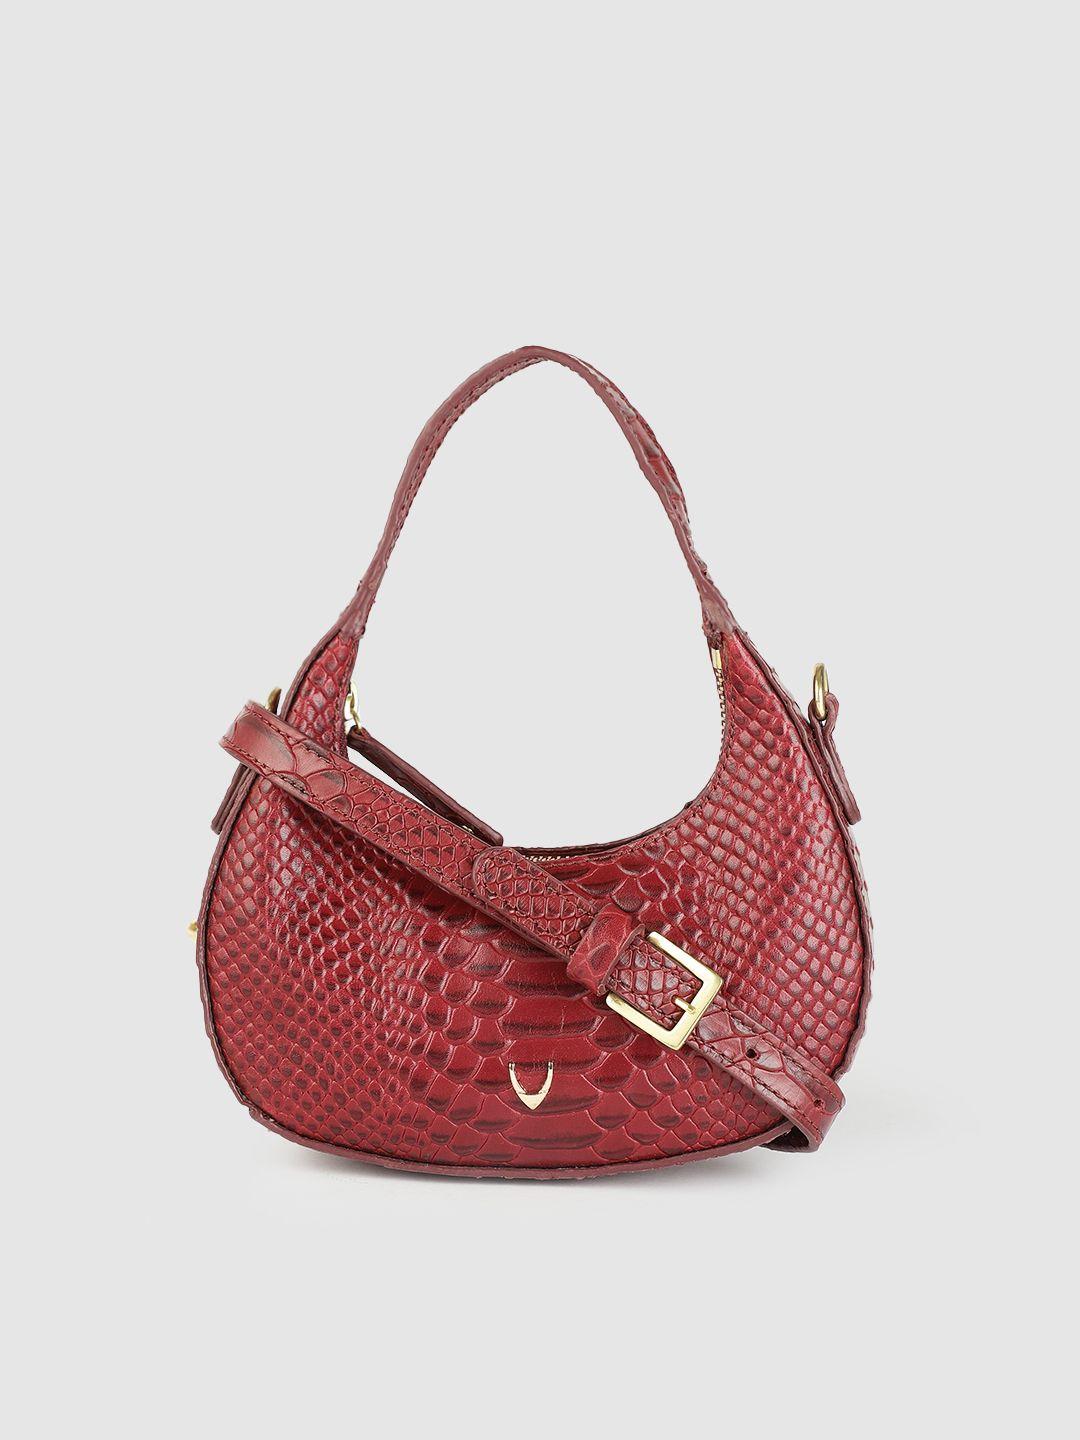 hidesign women maroon animal textured leather structured handheld bag